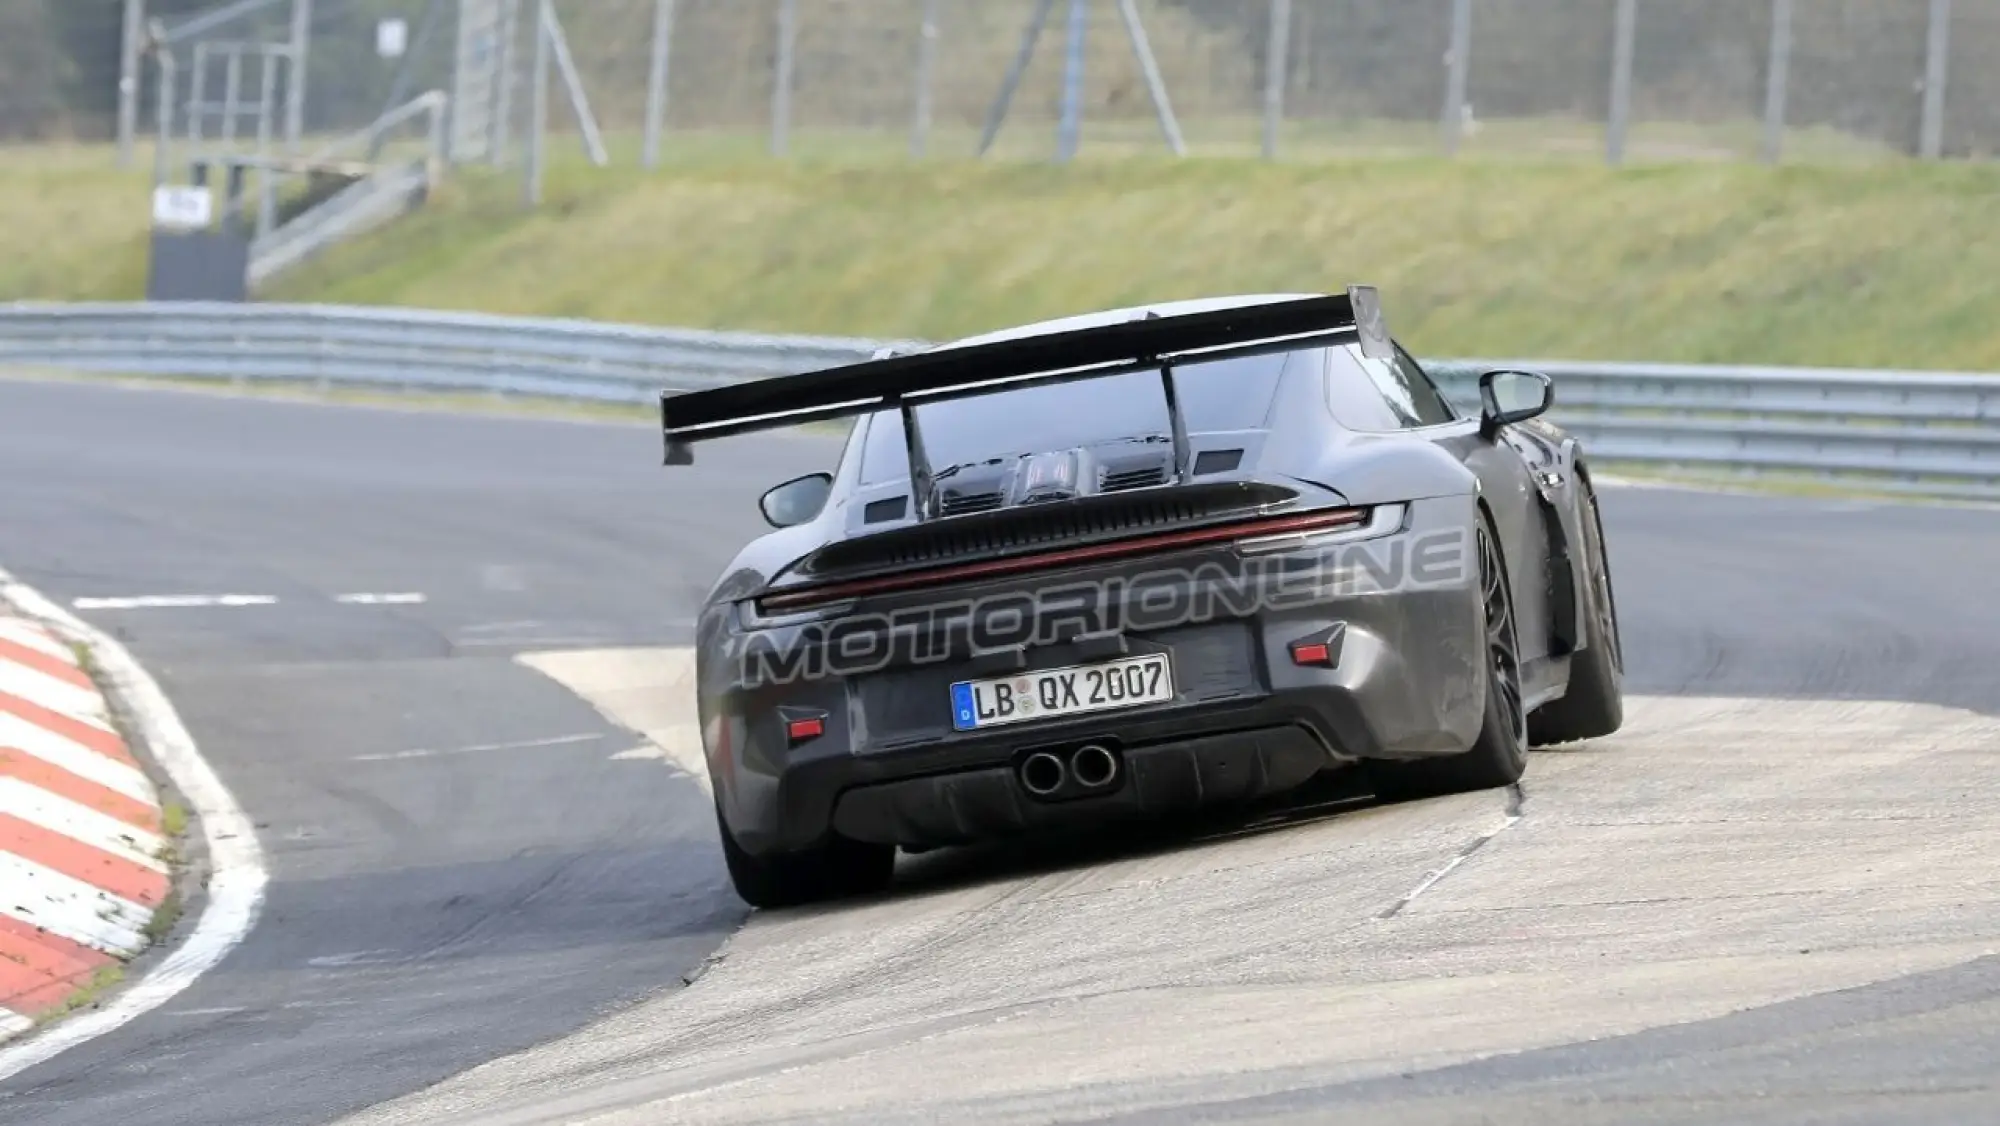 Porsche 911 GT3 RS - Foto Spia 1 06 21 - 5